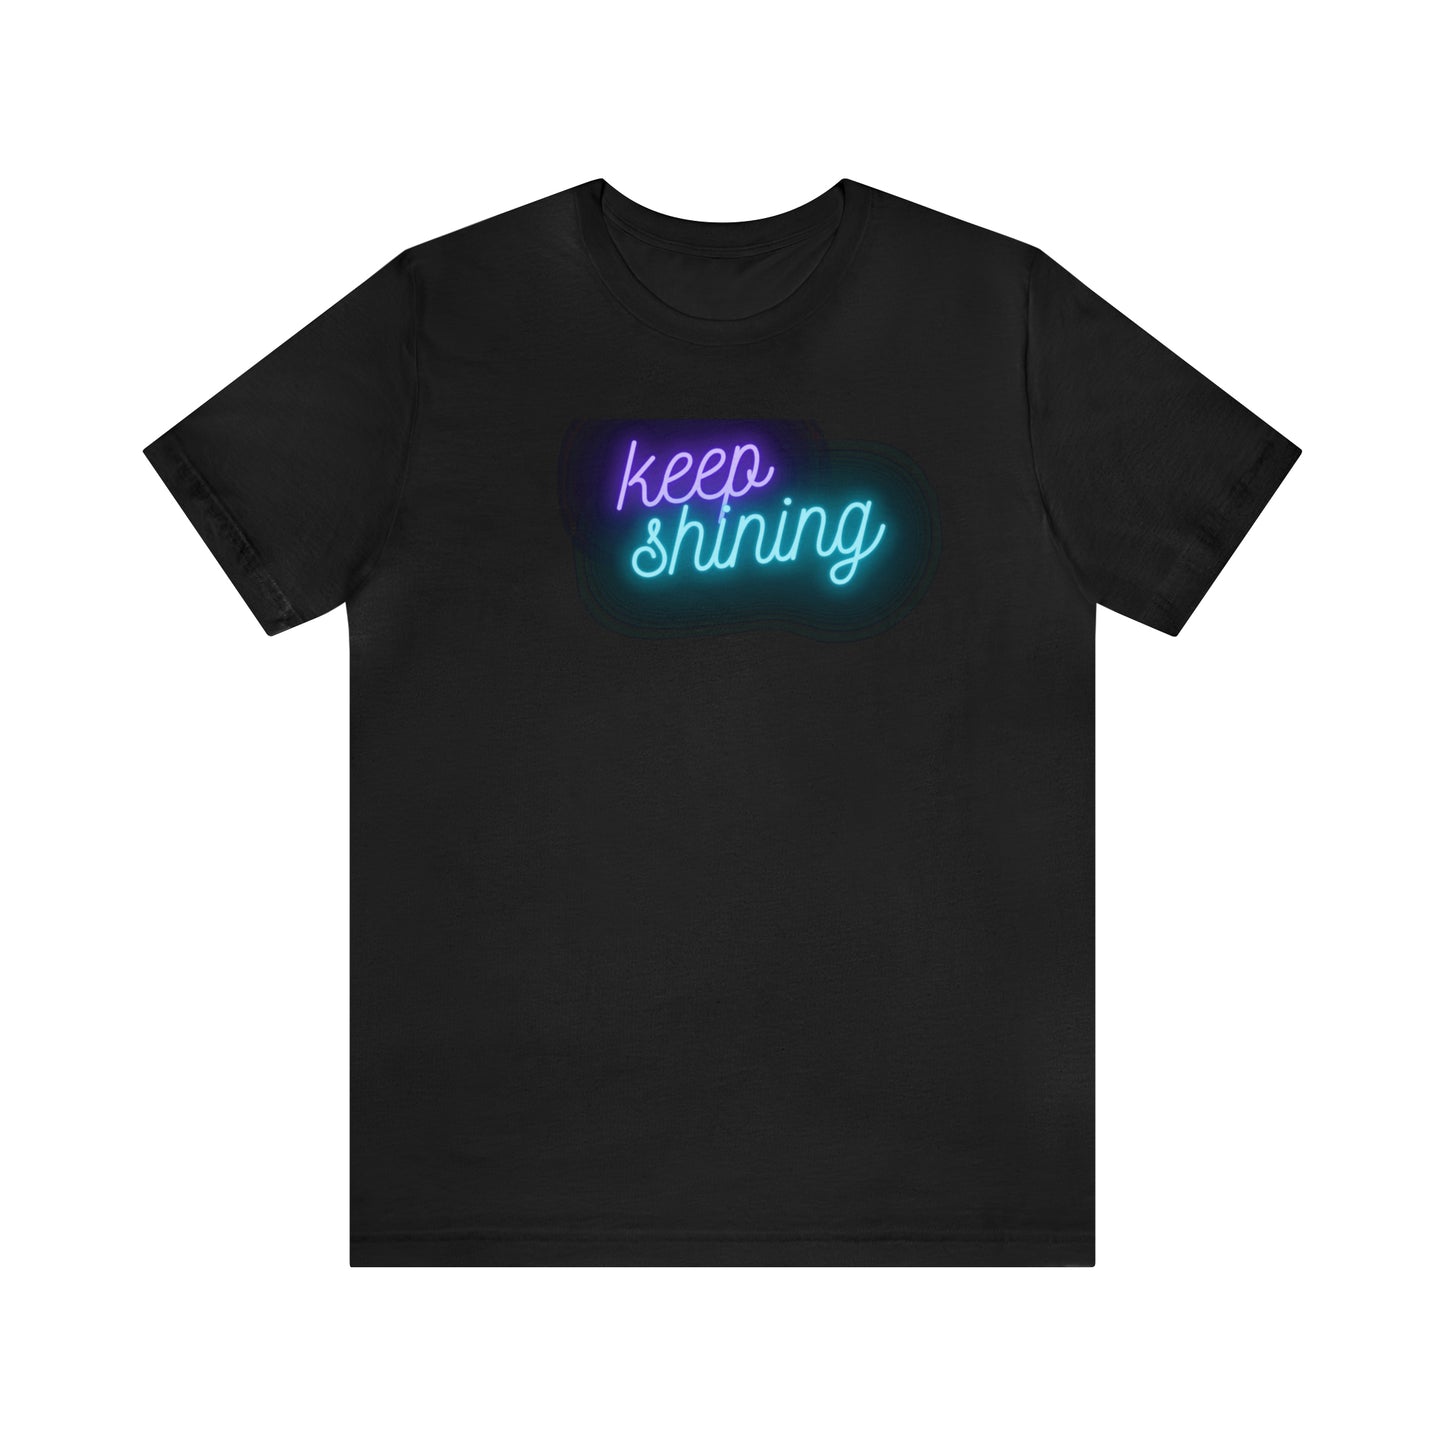 Keep Shining Shirt, Neon Lights Shirt, Night Life Party Shirt, Pride Shirt, Coming Out Gift, Pride Gift, Independent Woman Shirt, Be Happy